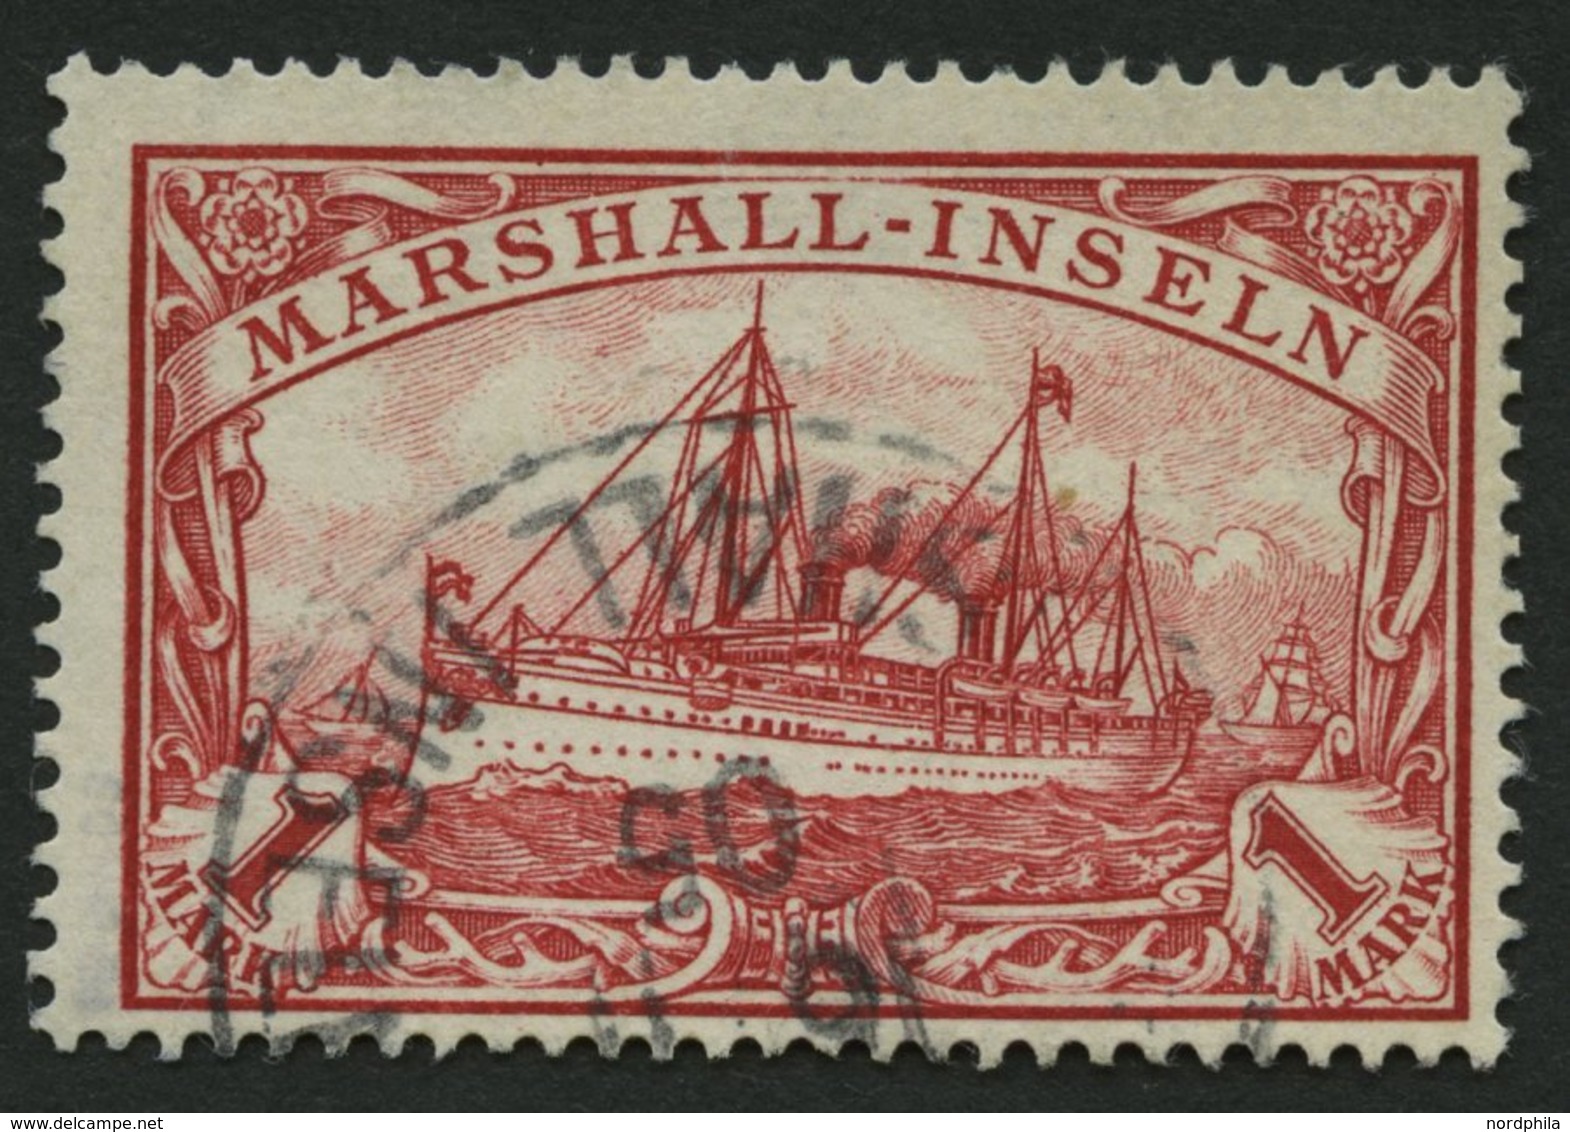 MARSHALL-INSELN 22 O, 1901, 1 M. Rot, Pracht, Gepr. Bothe, Mi. 100.- - Isole Marshall